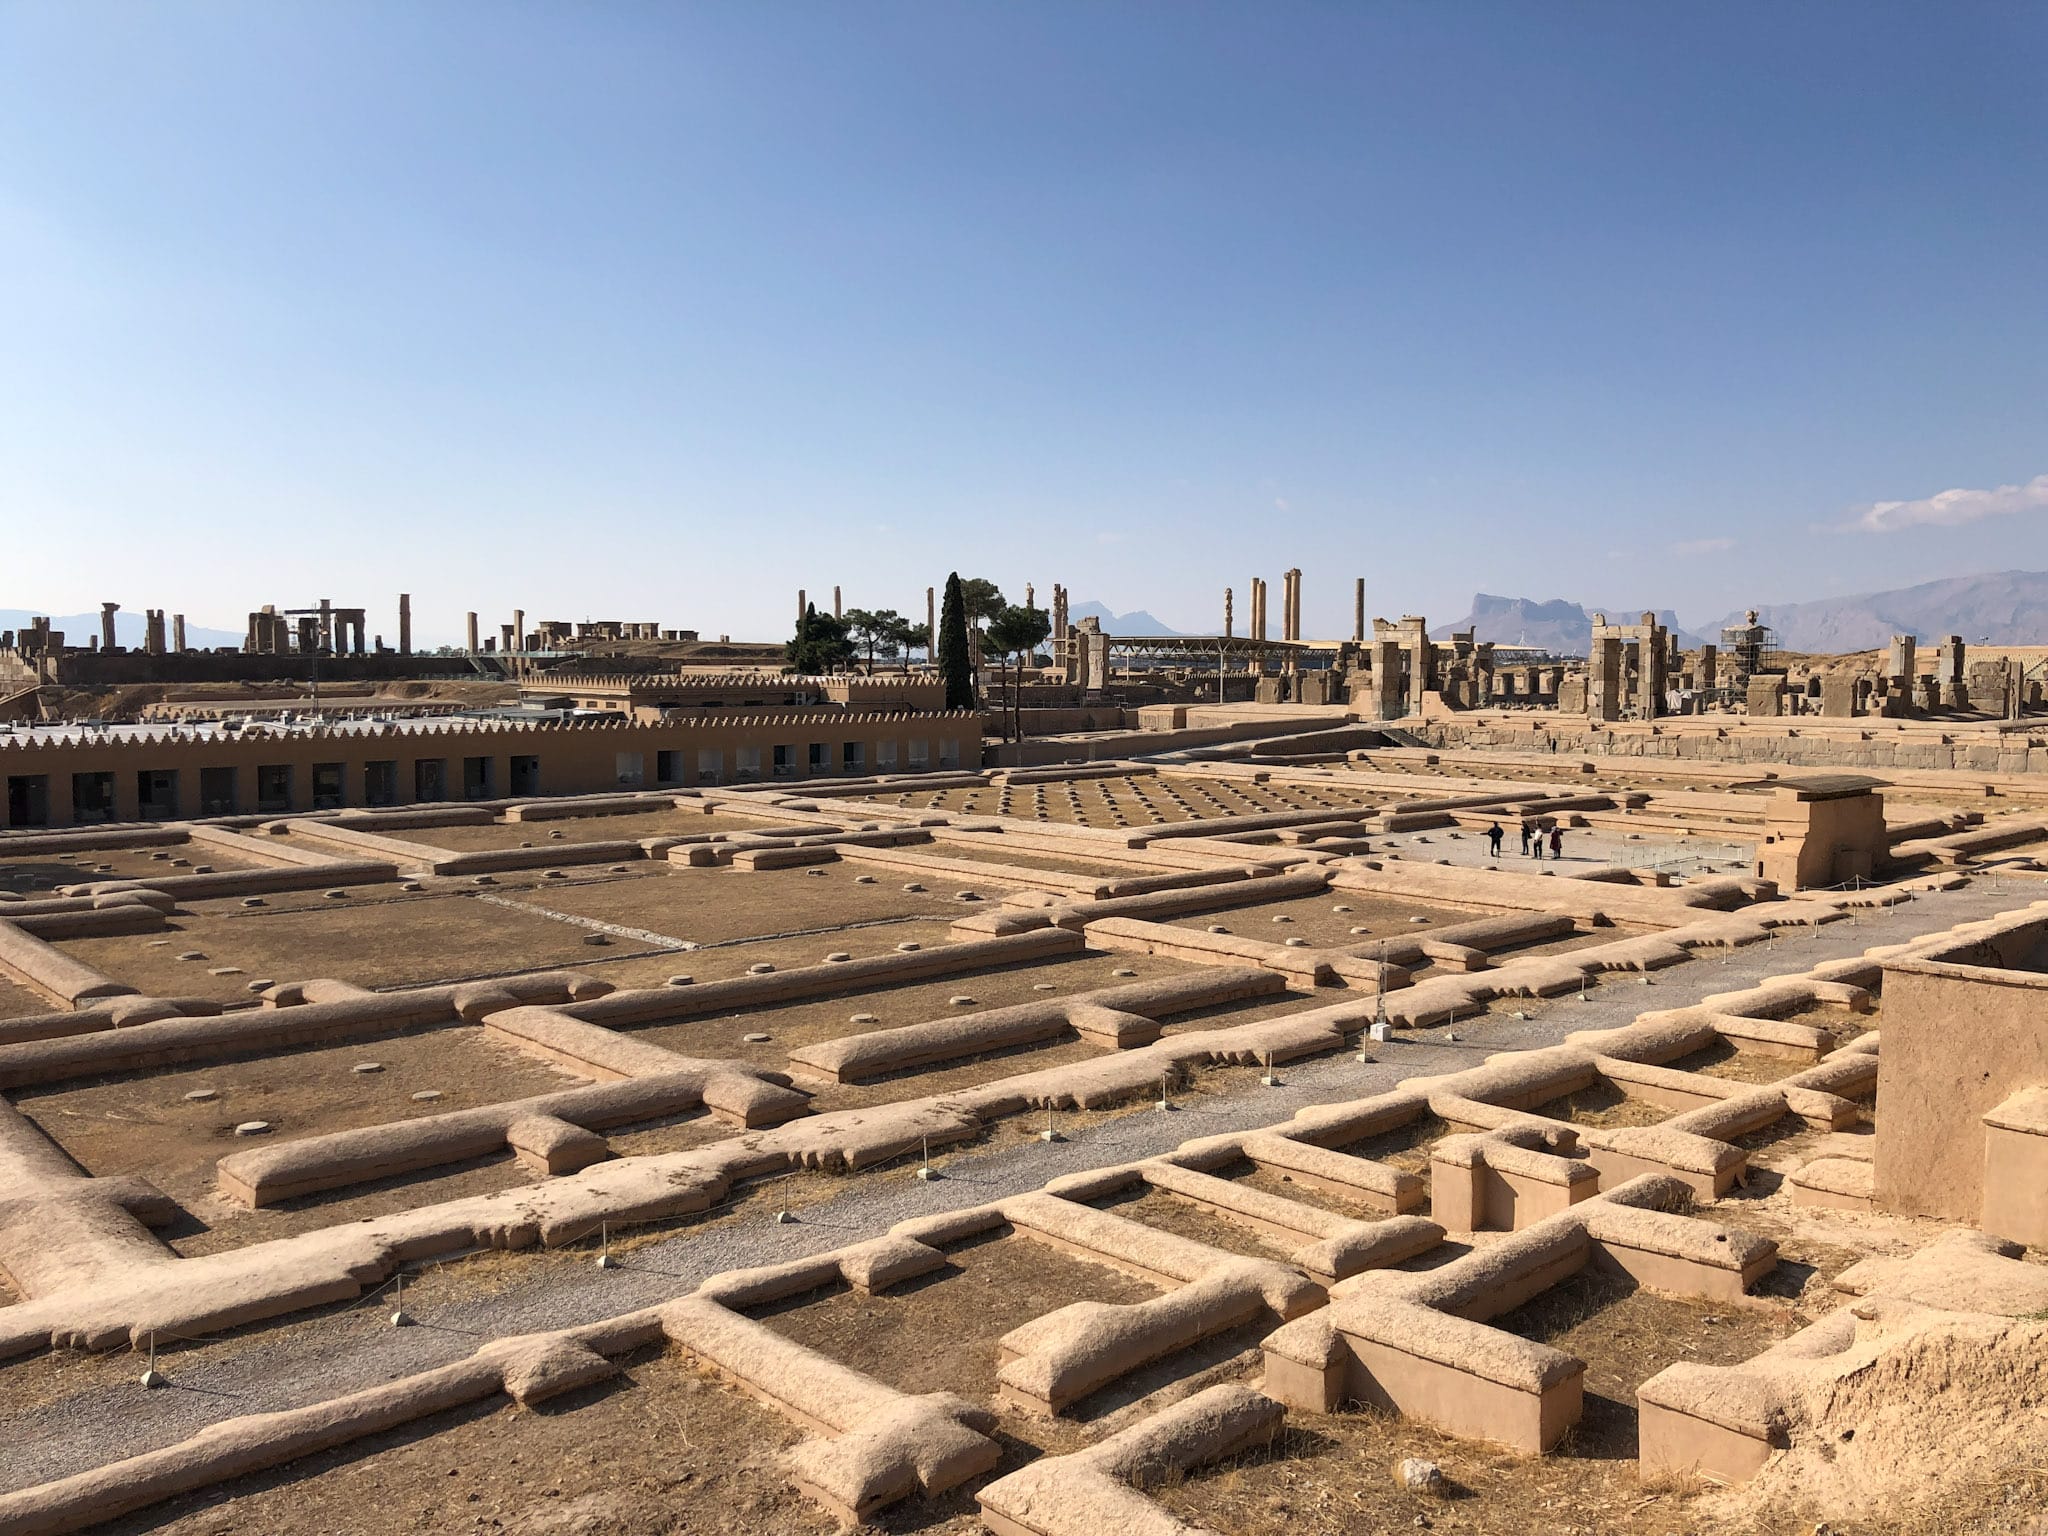 Old city ruins in Persepolis, Iran